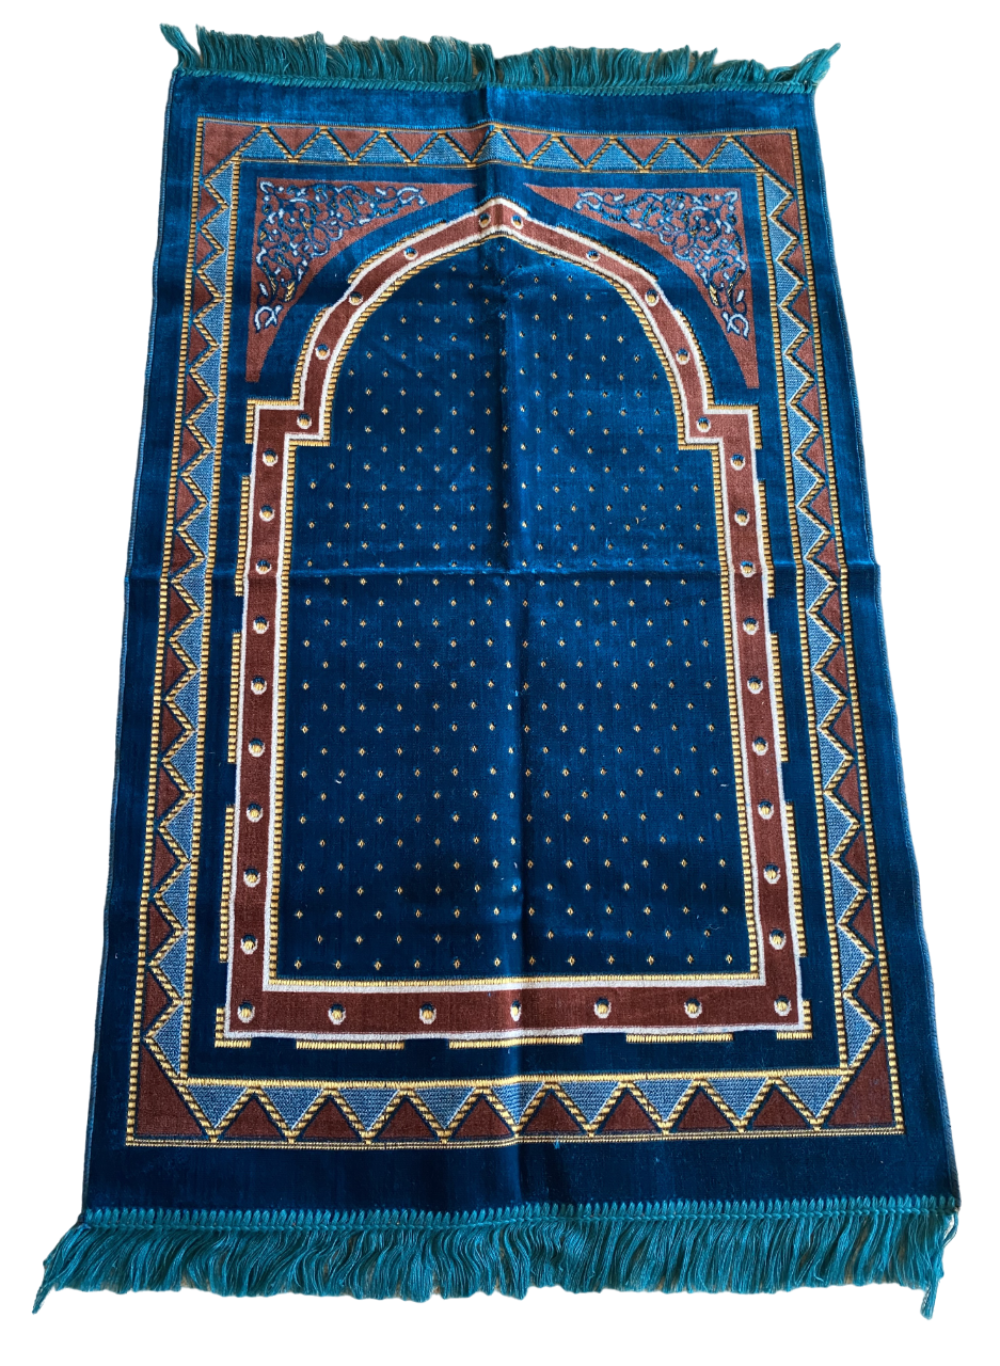 KD Islamic Prayer Rugs, Muslim Prayer Mats, Velvet Sajjadah, Janamaz, Islamic Gifts